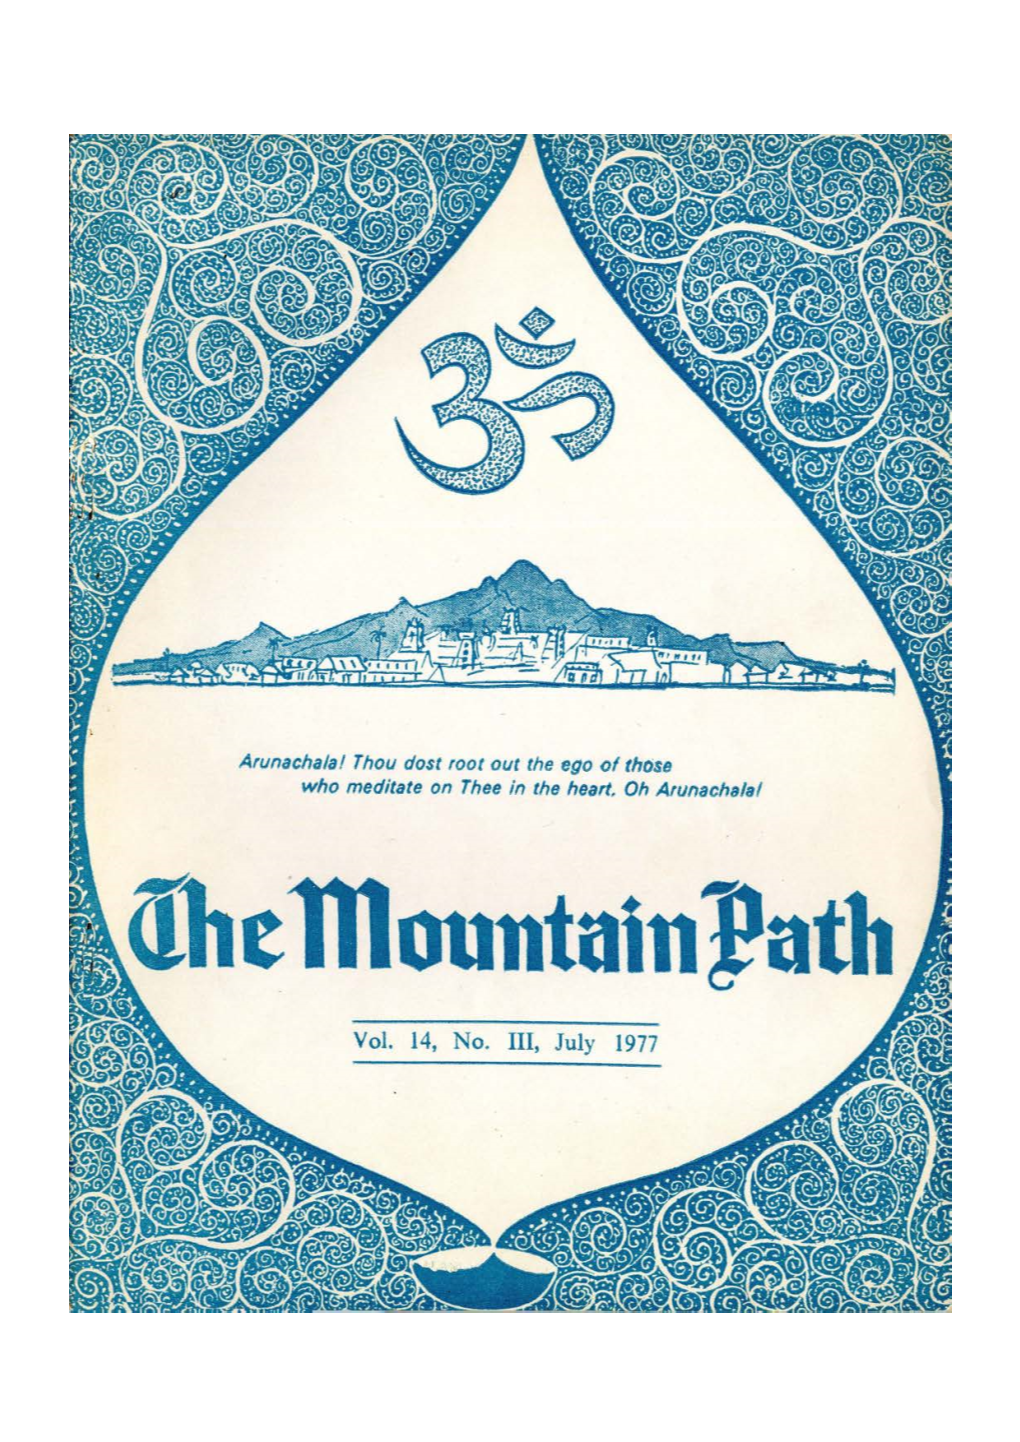 The Mountain Path Vol. 14 No. 3, July 1977